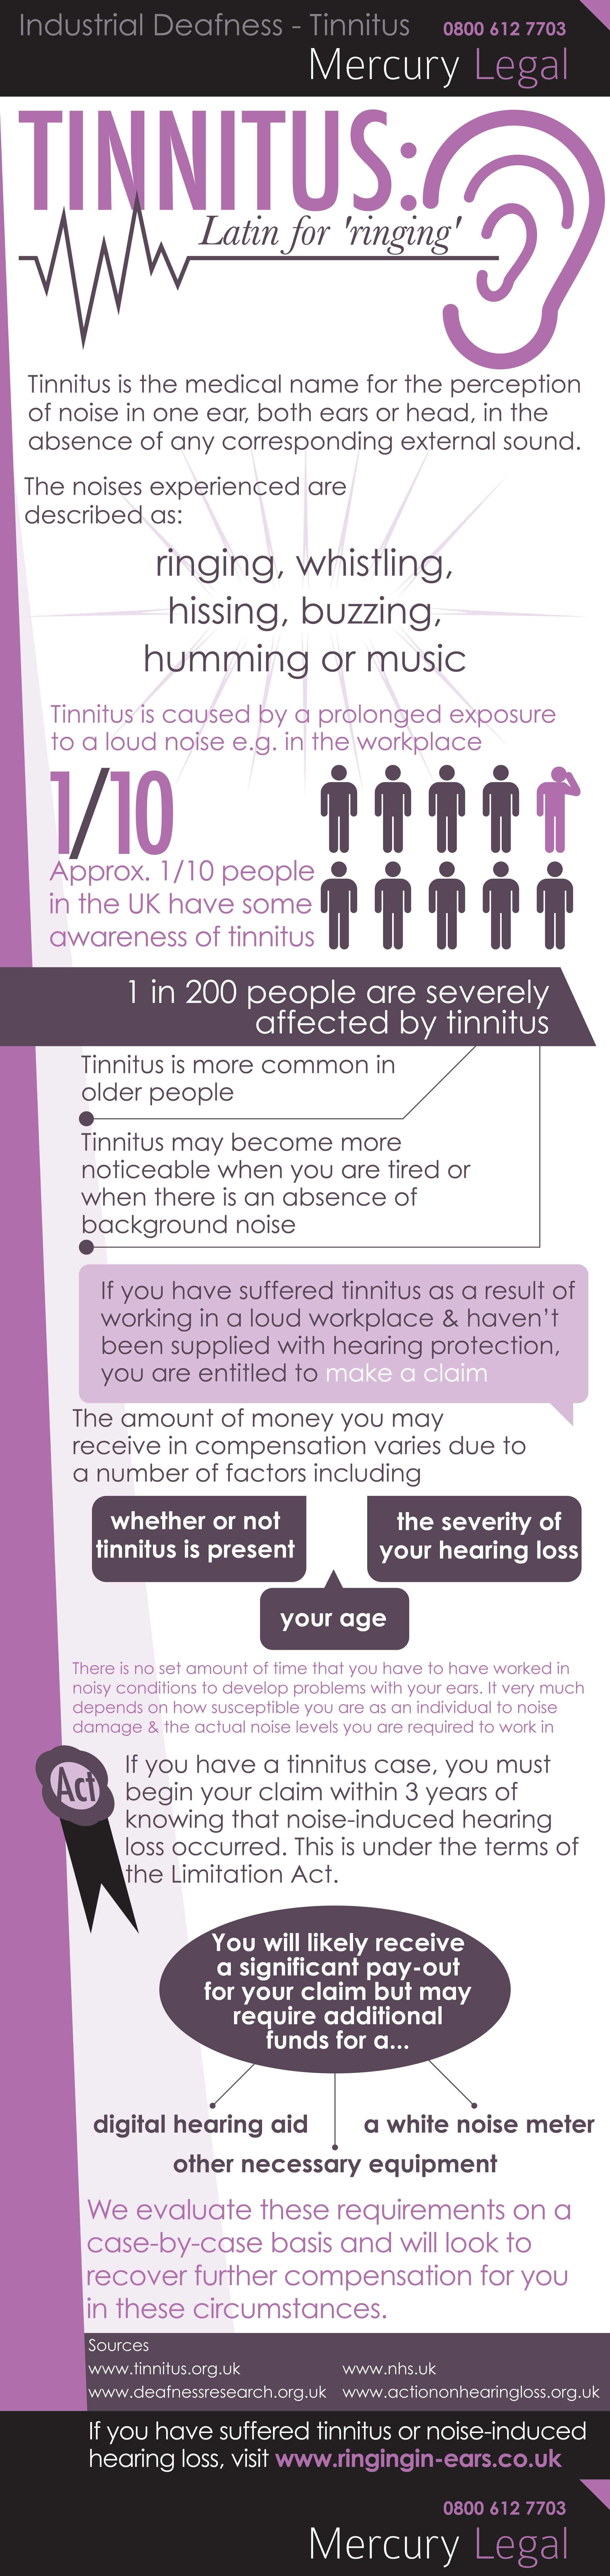 Tinnitus Infographic